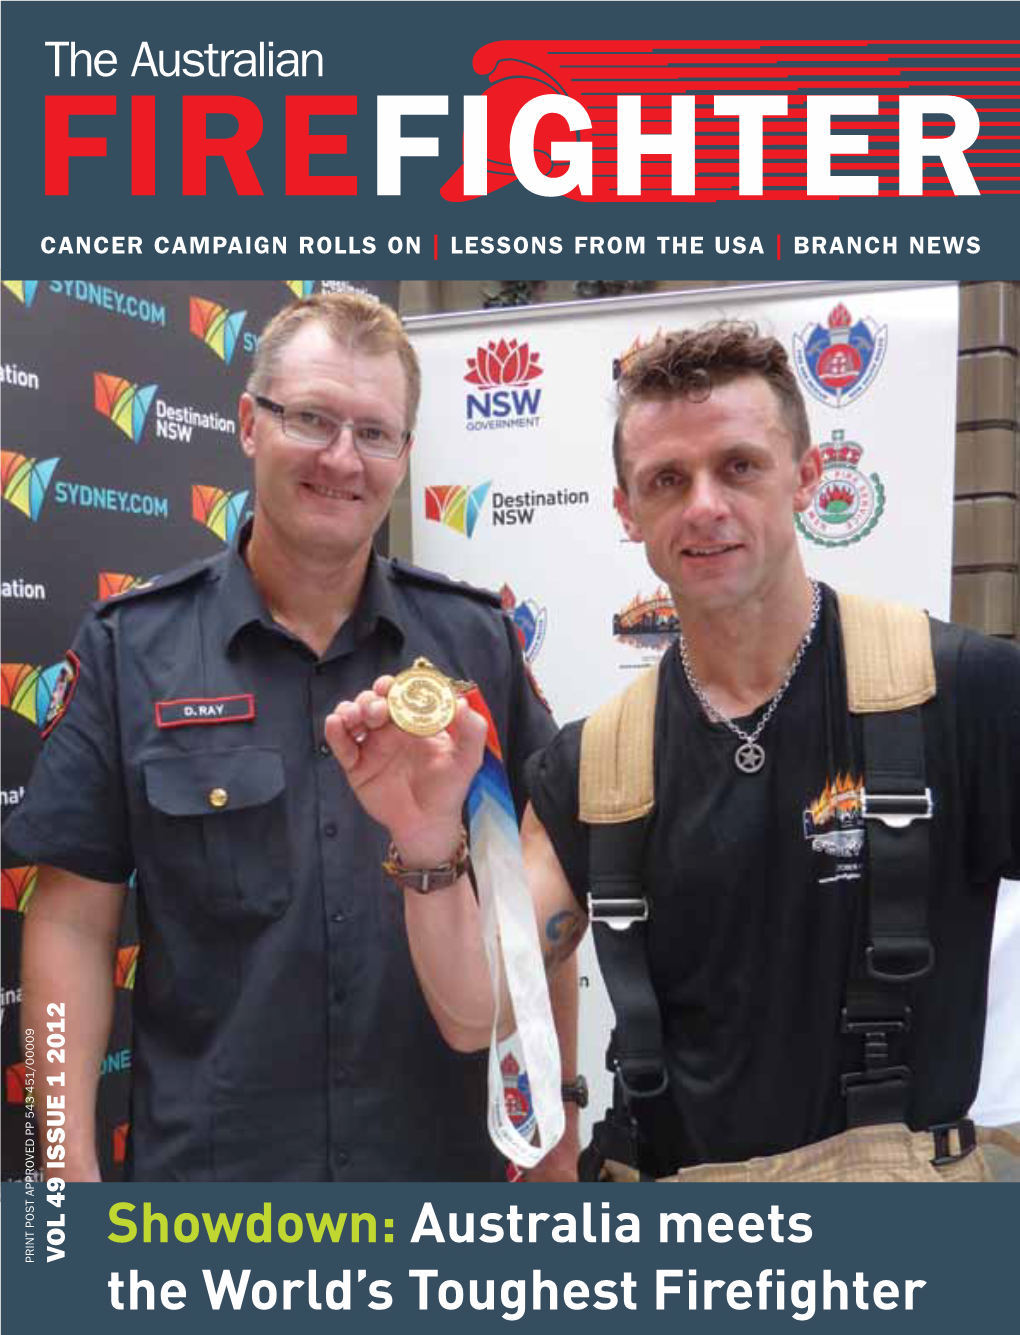 Australia Meets the World's Toughest Firefighter